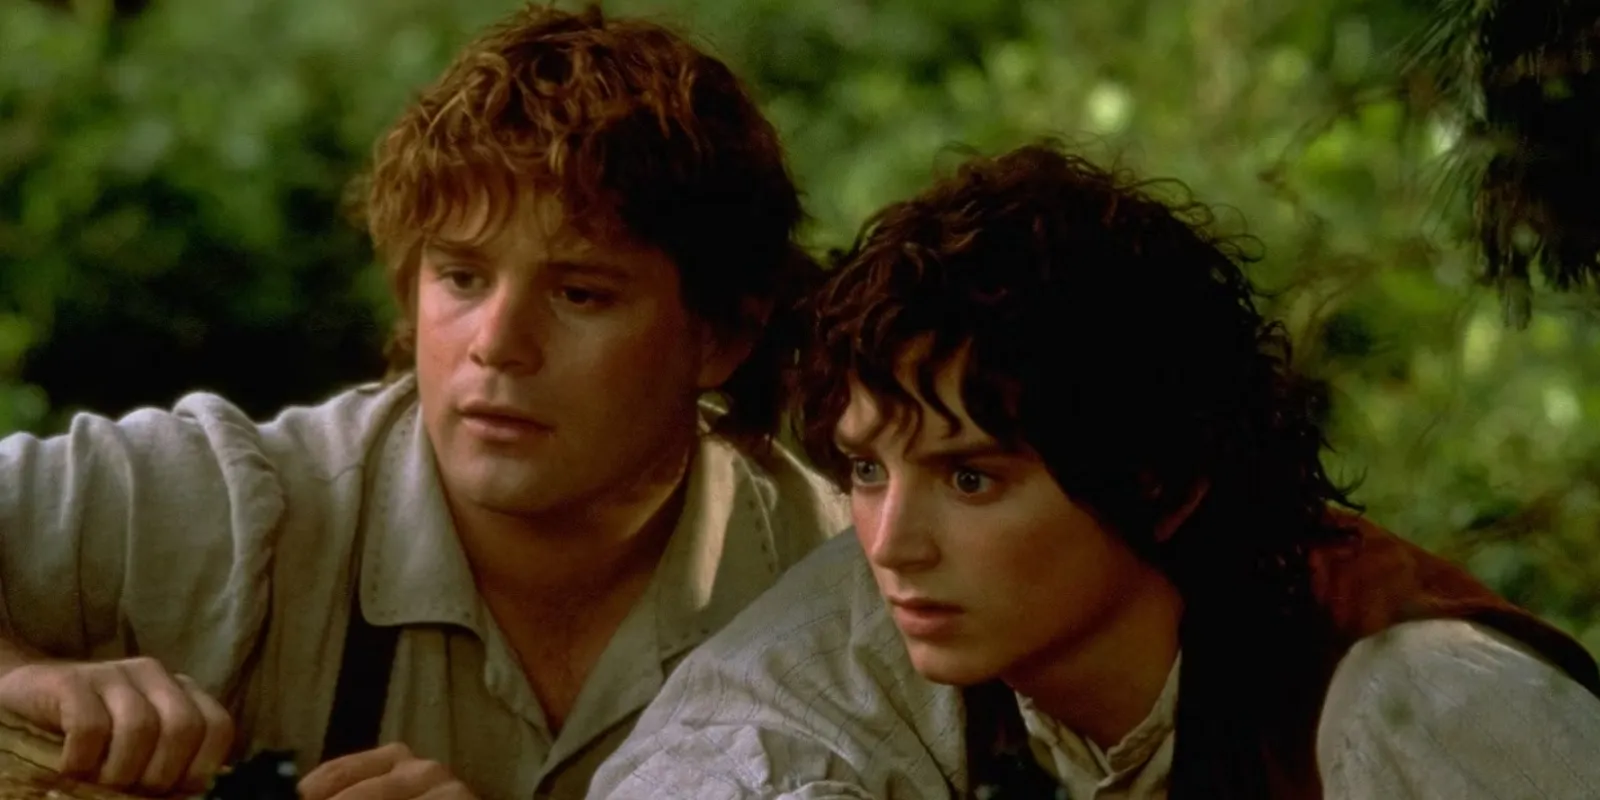 Sean Astin as Sam. Elijah Wood as Frodo.